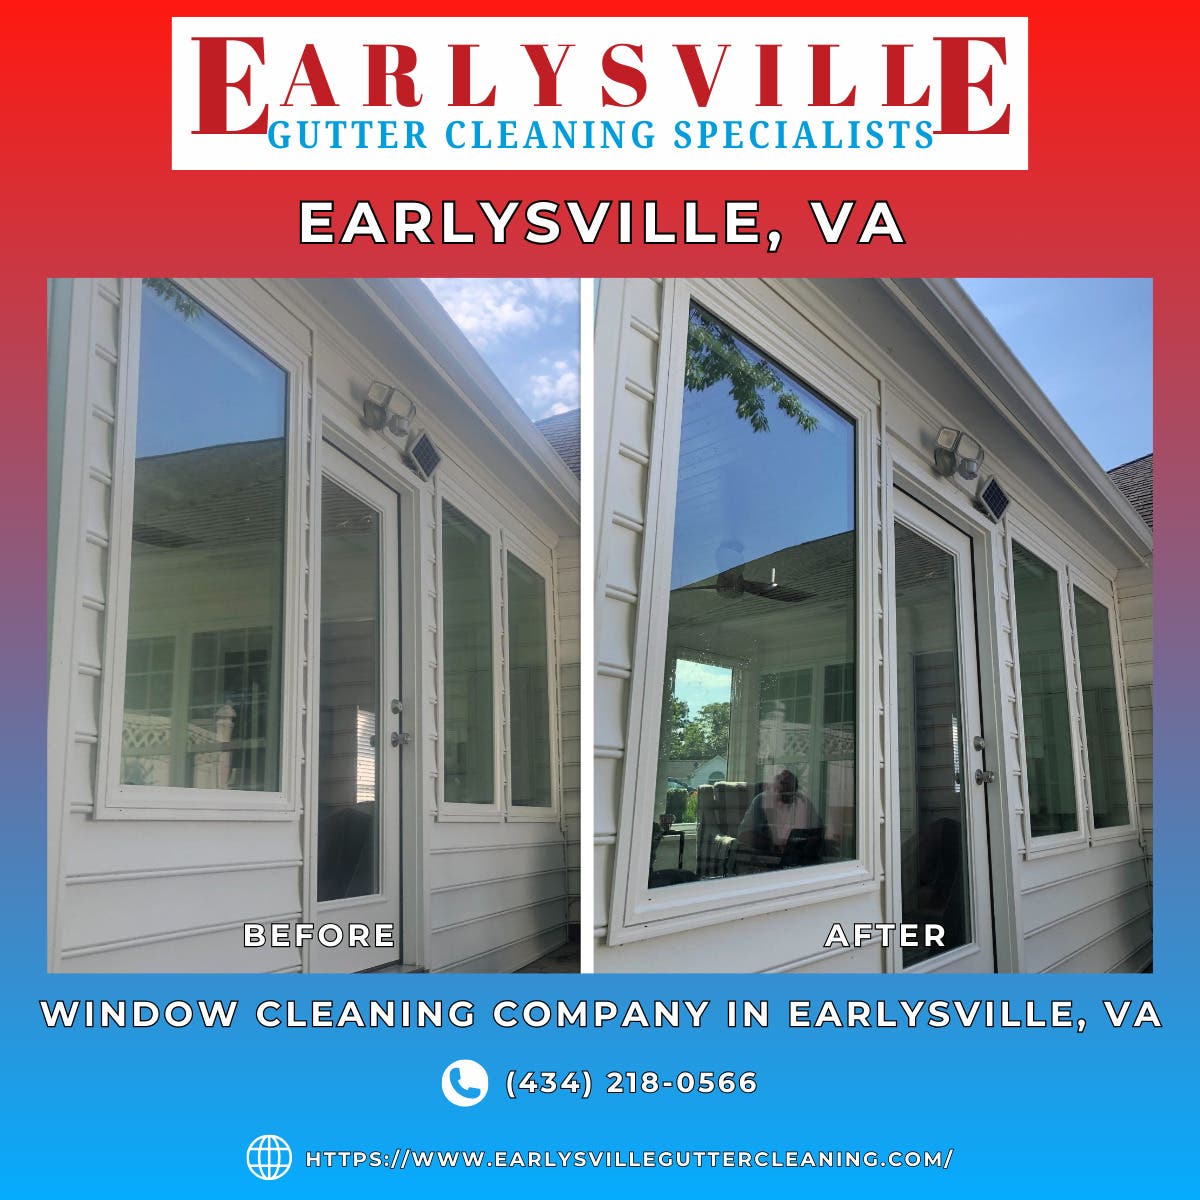 Window Cleaning Company in Earlysville, VA - Earlysville Gutter Cleaning Specialists